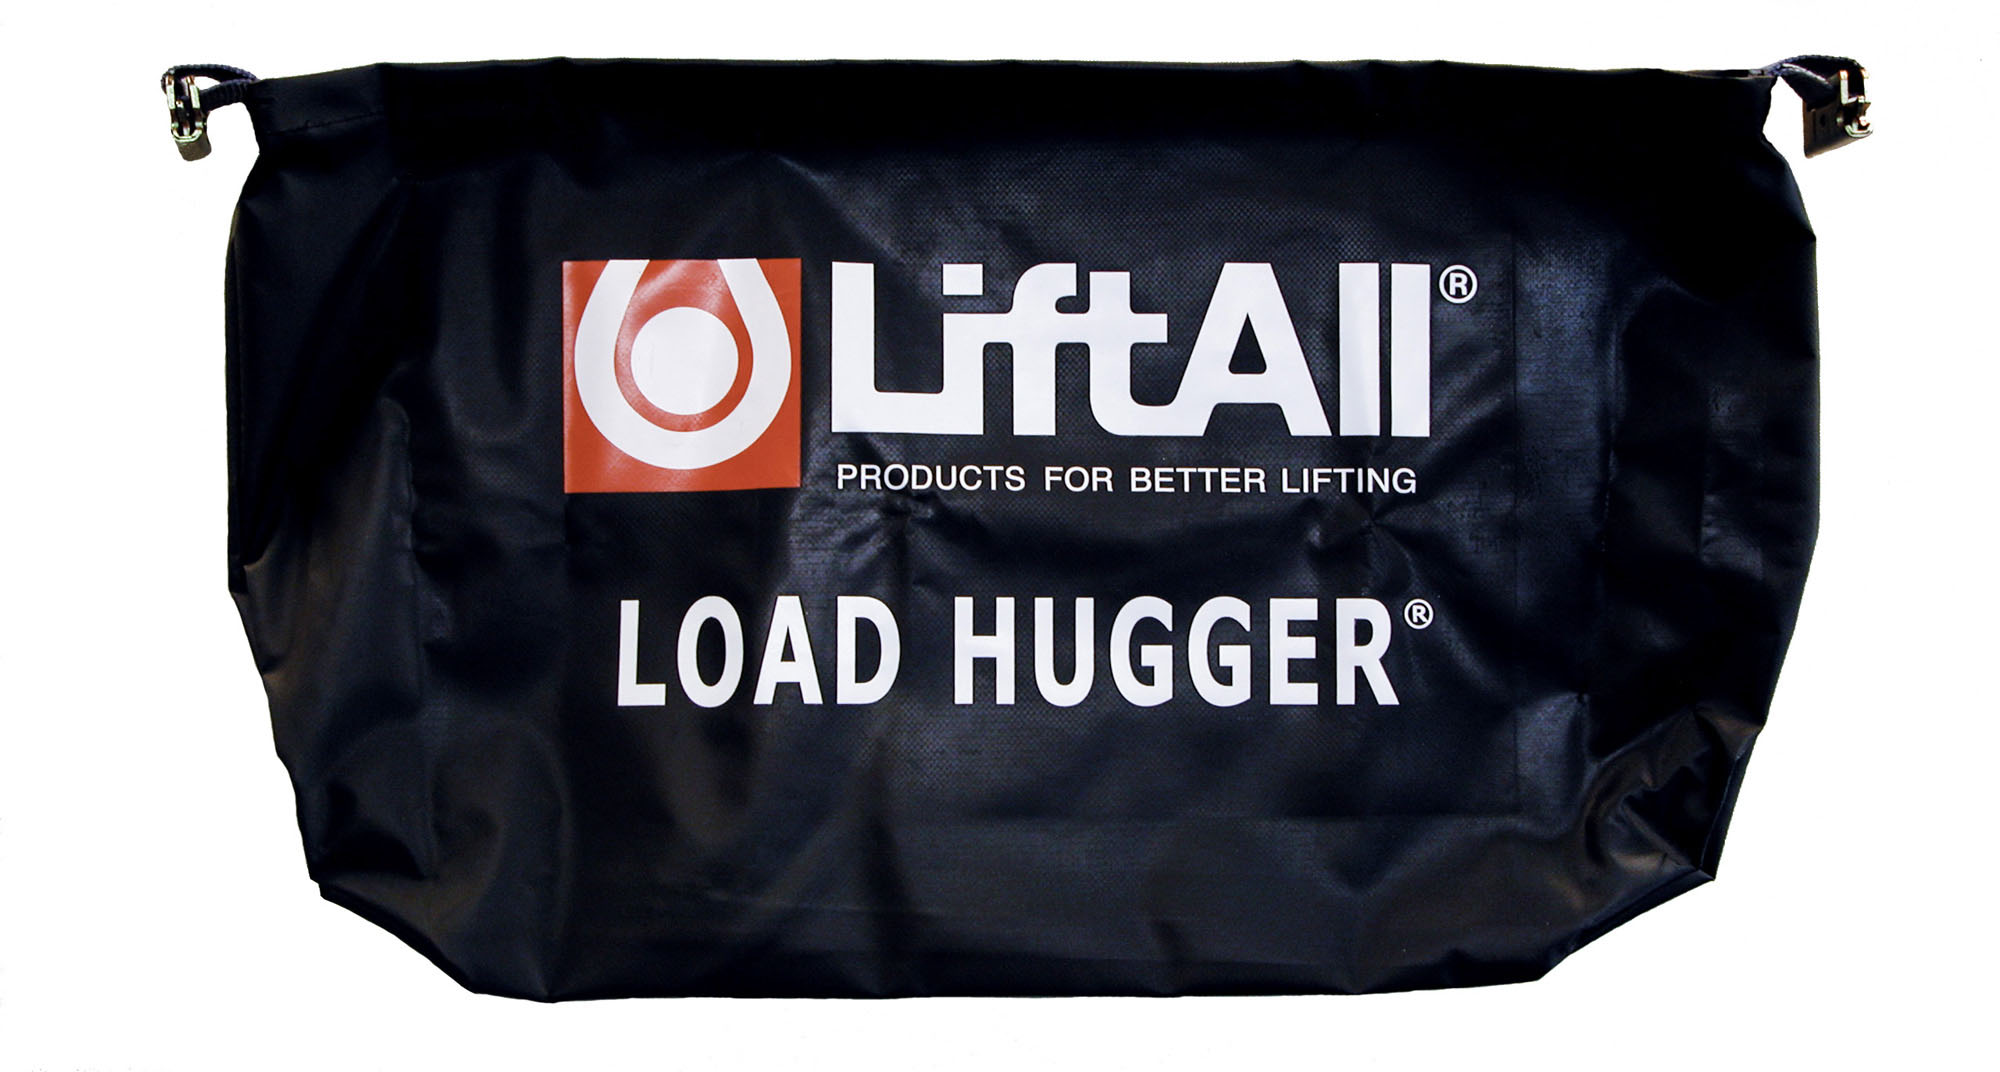 Lift-All logistic strap storage bag